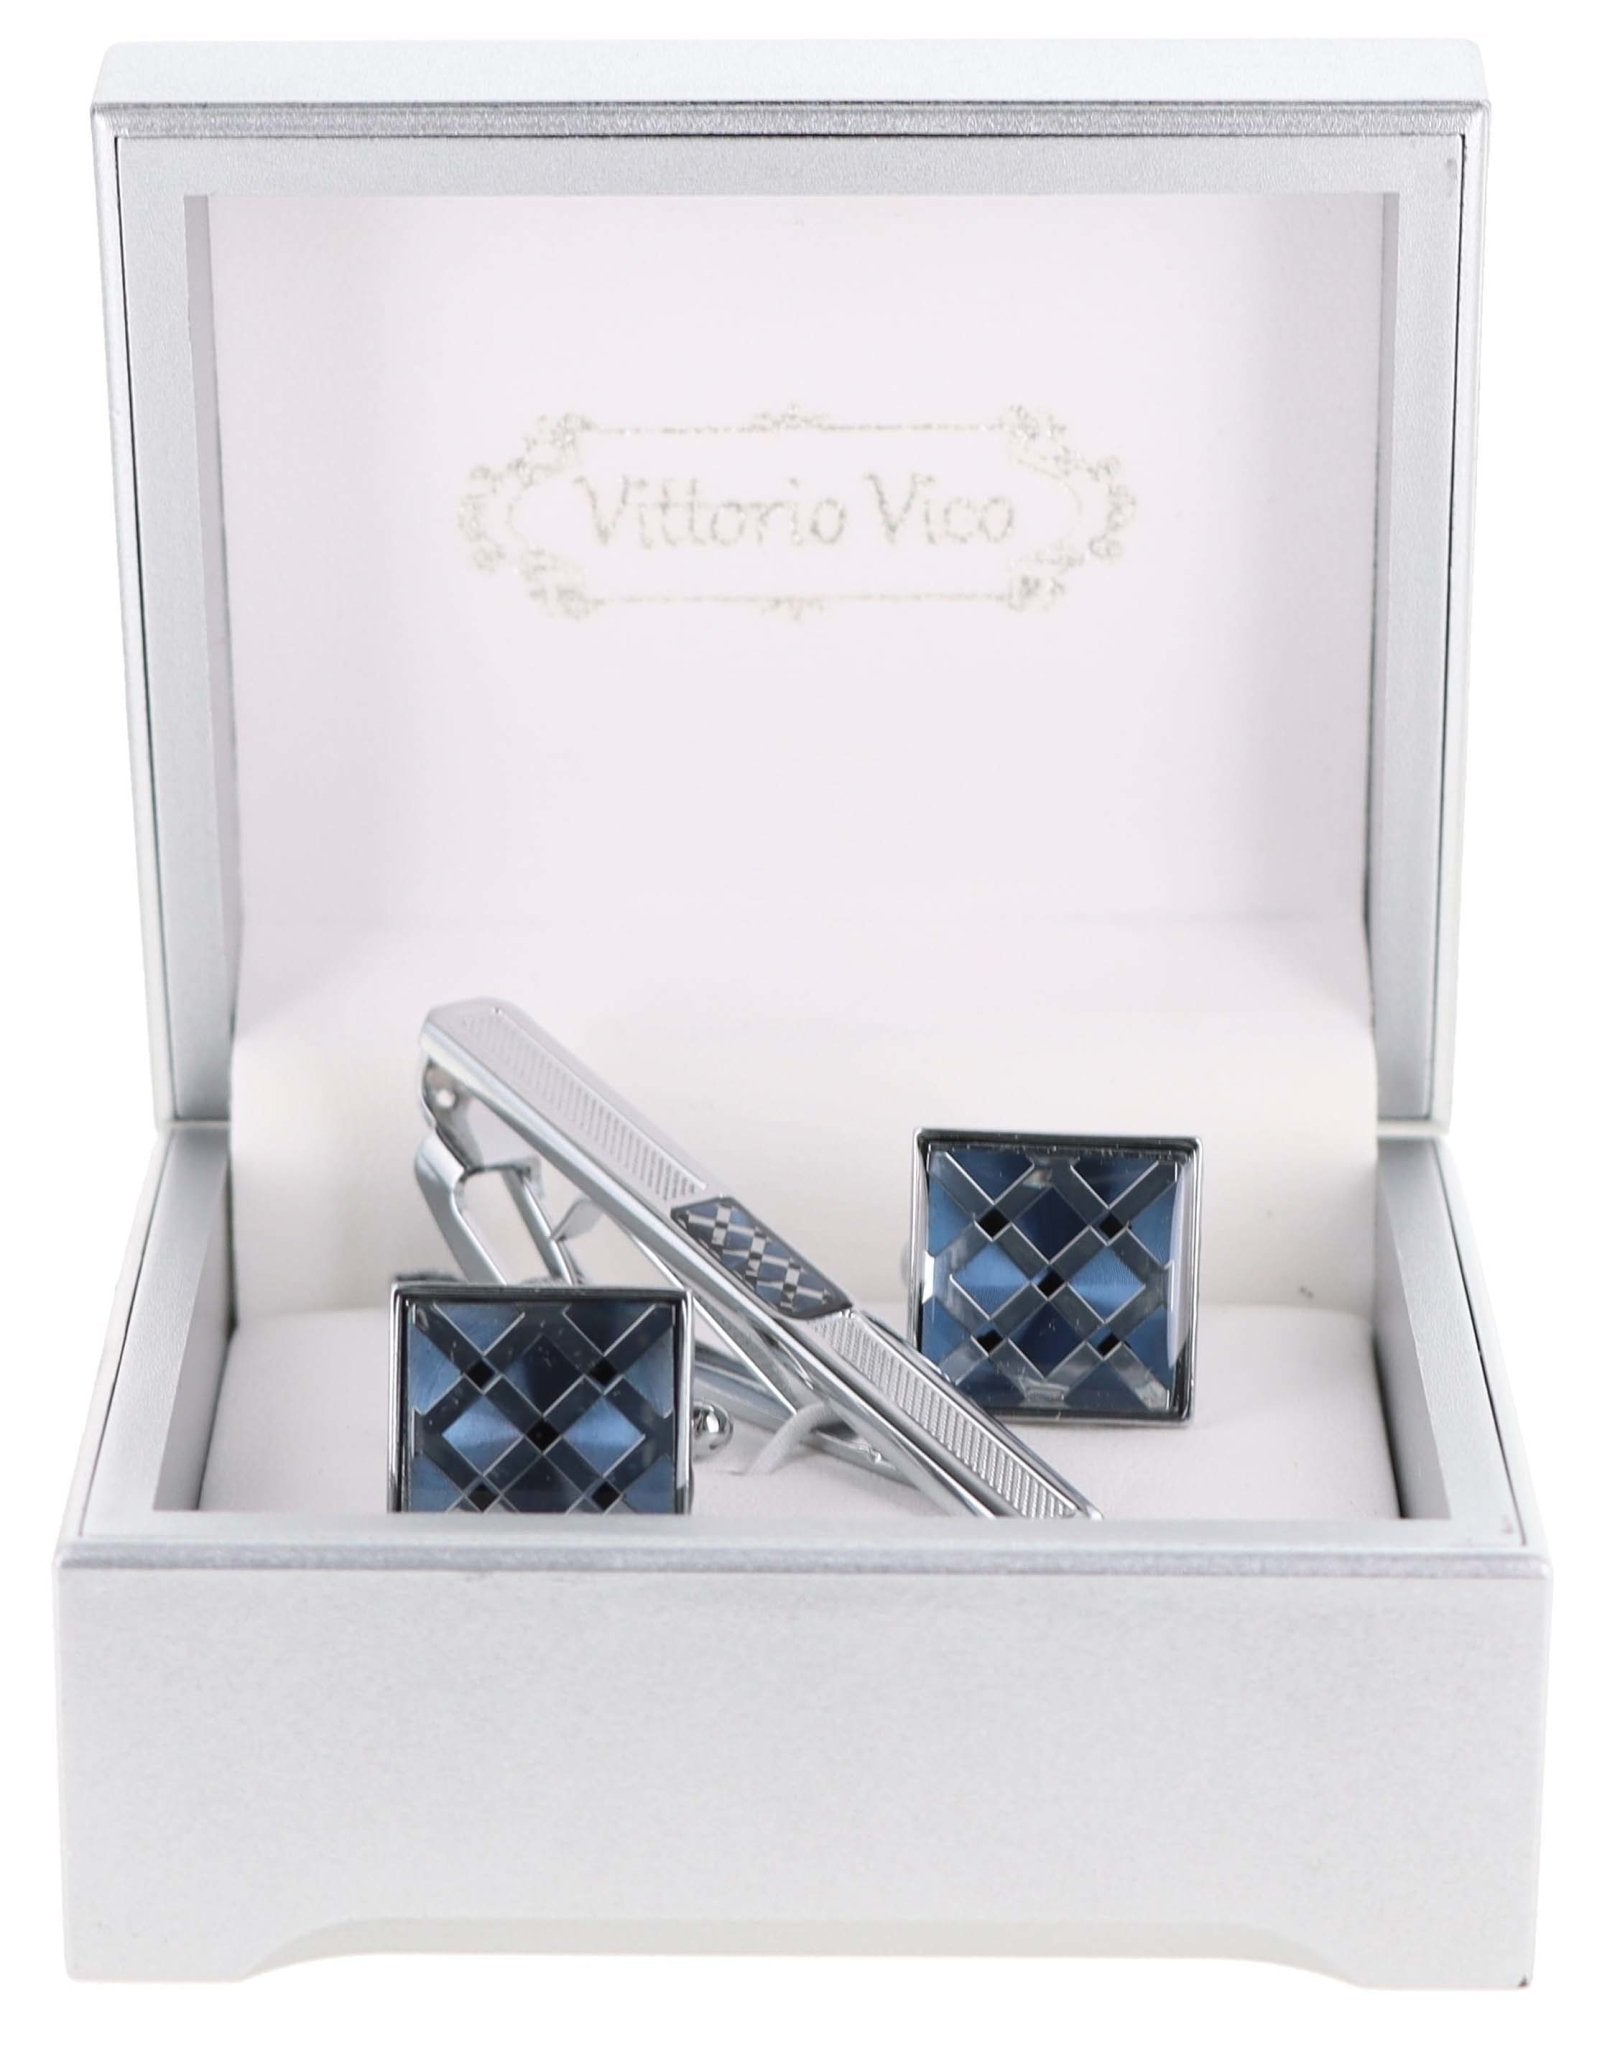 Vittorio Vico Gold and Silver Enamel Cufflinks & Tie Bar Set